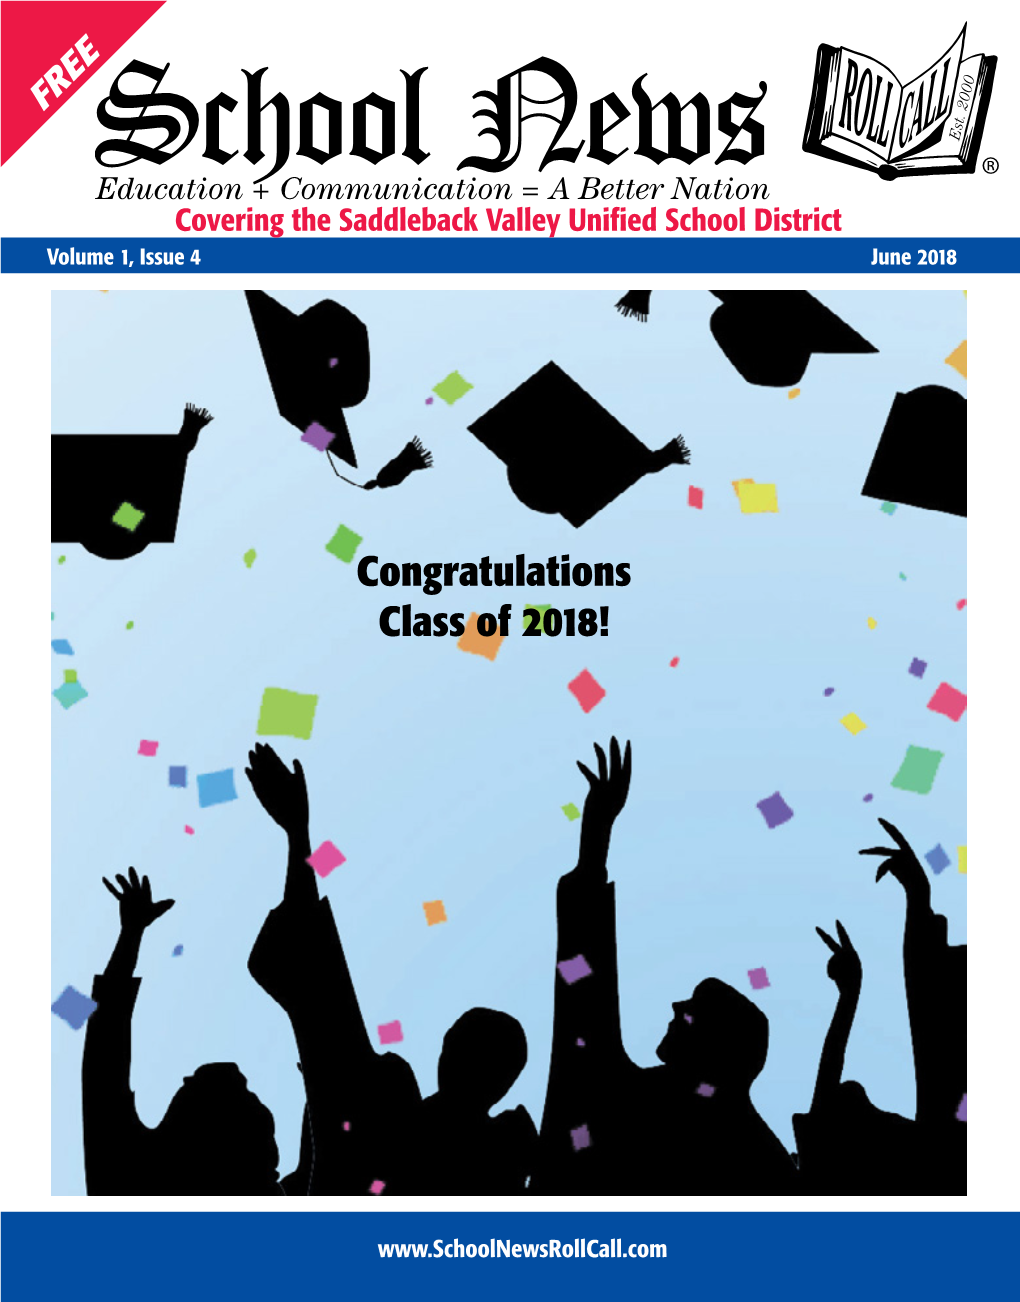 Congratulations Class of 2018!